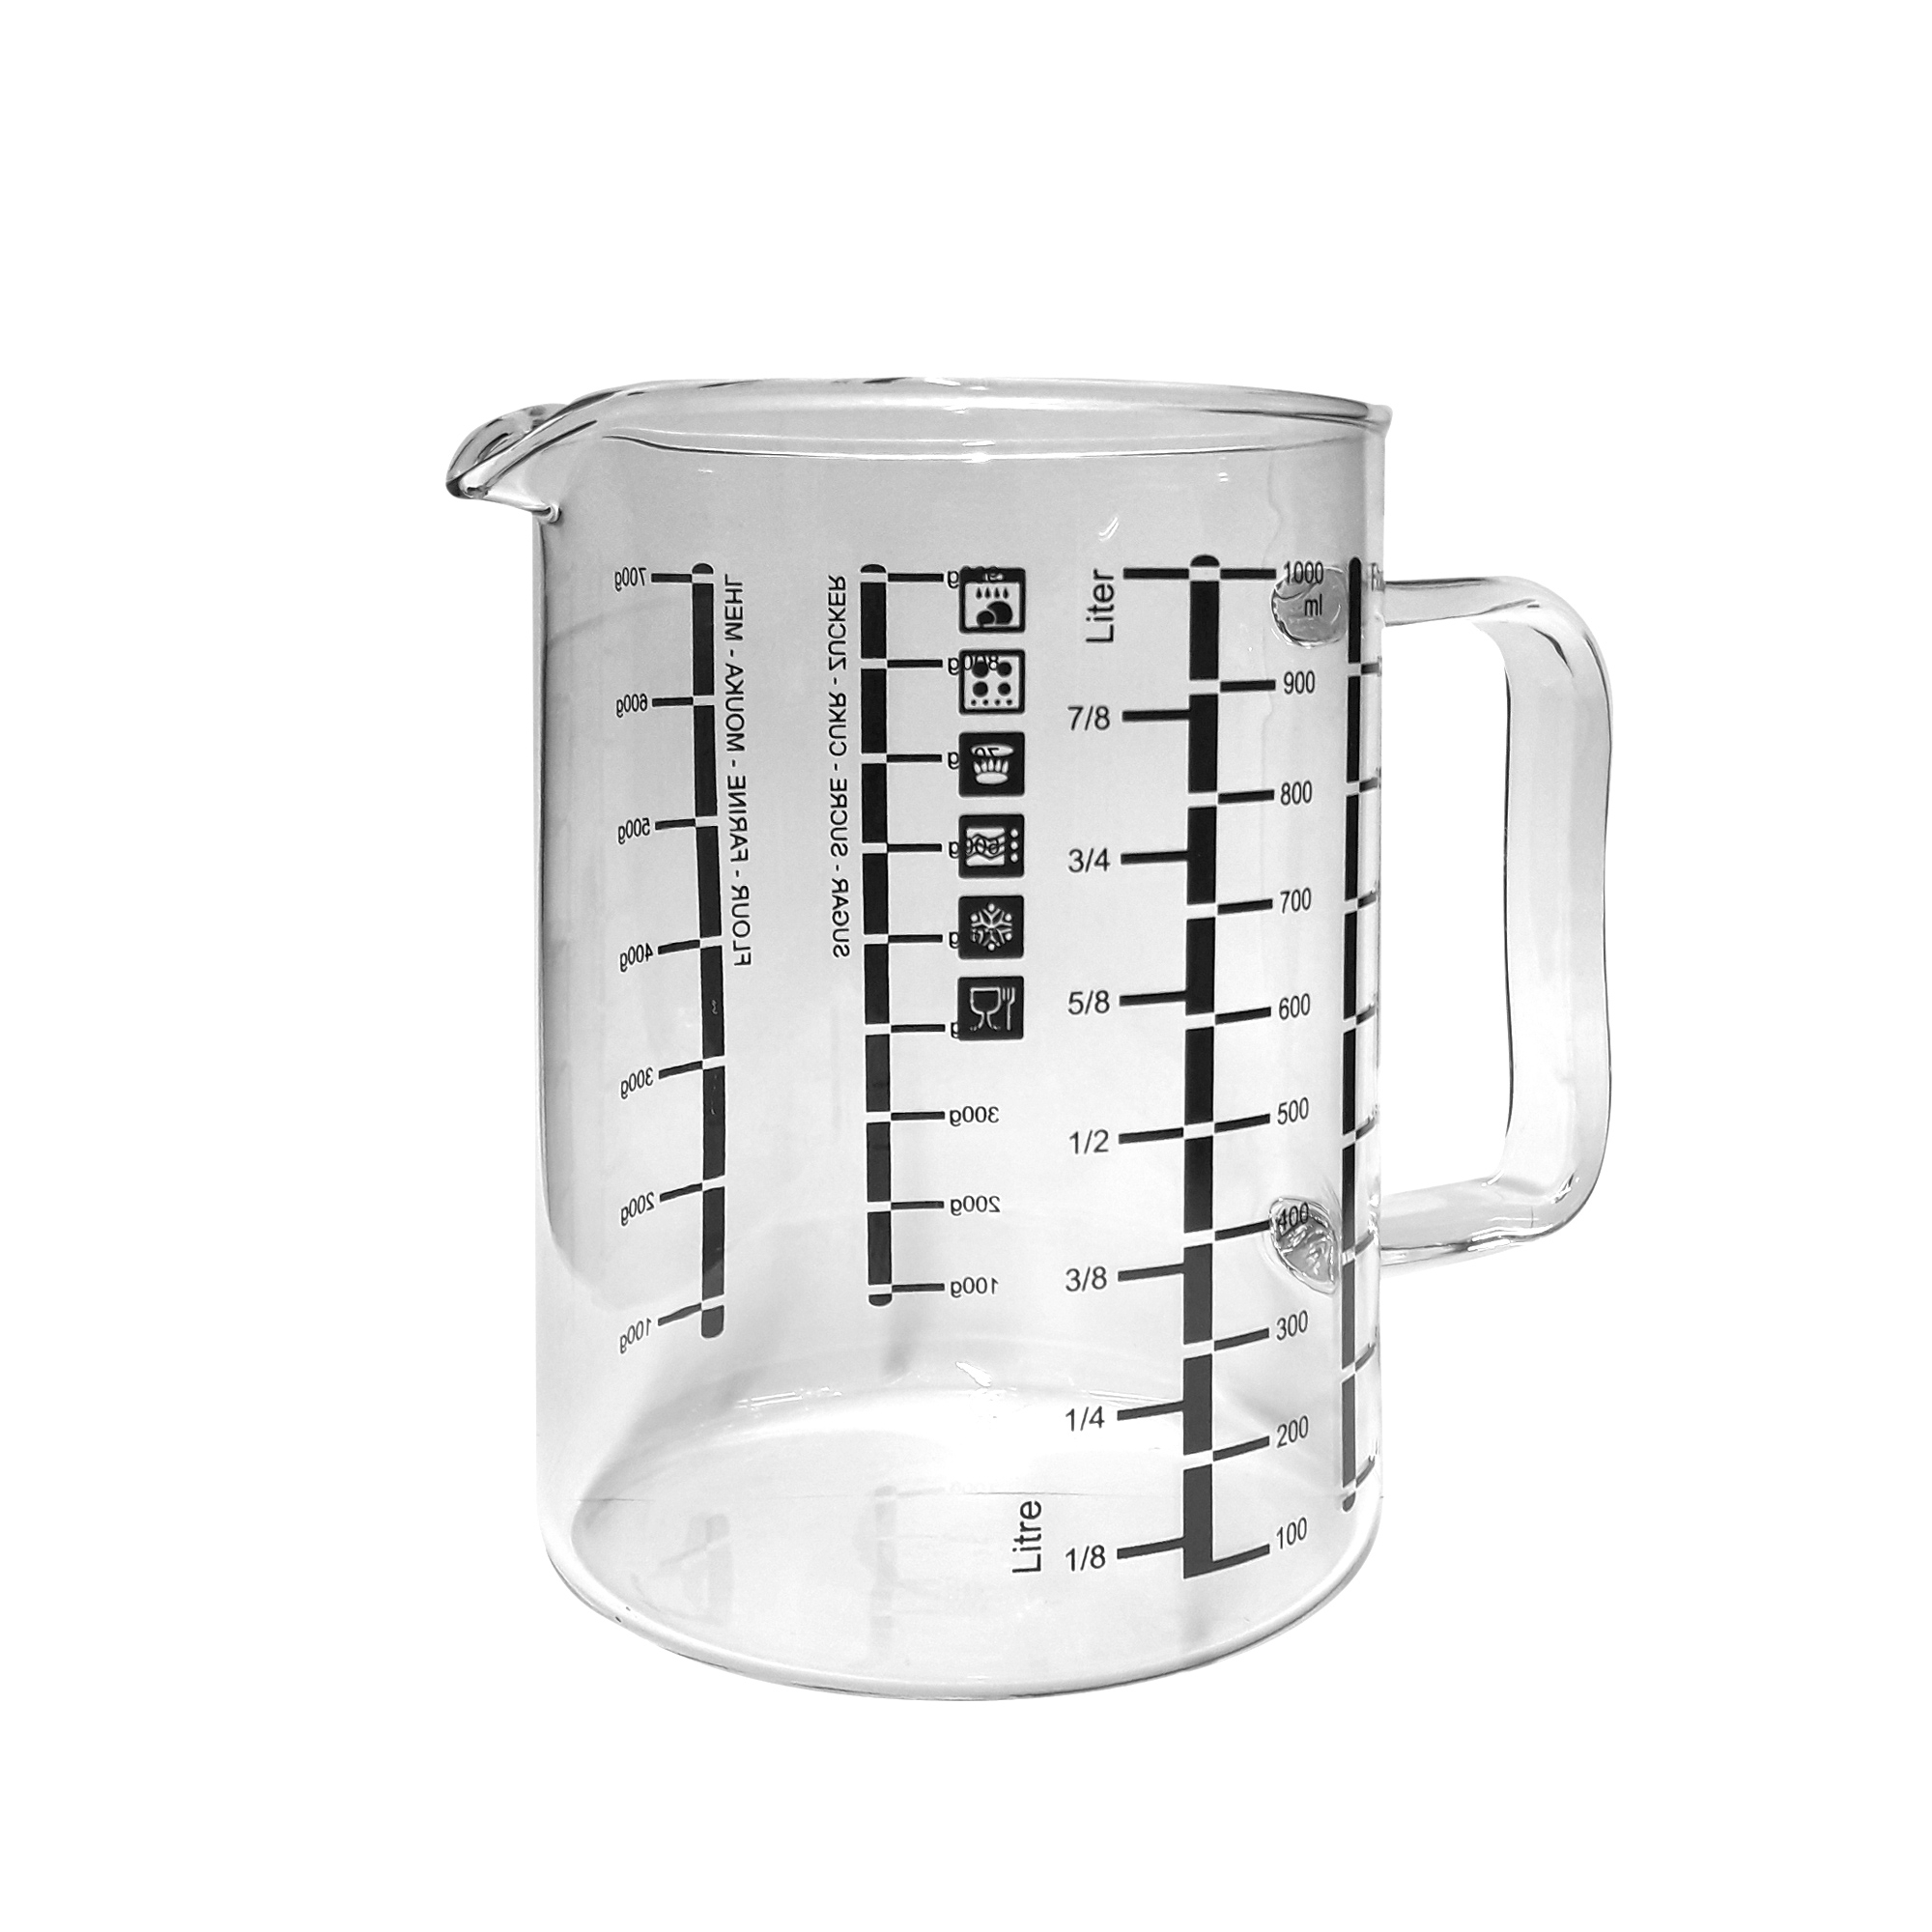 Riess/SIMAX - FASHION GLASS - kitchen size 1.0 liters